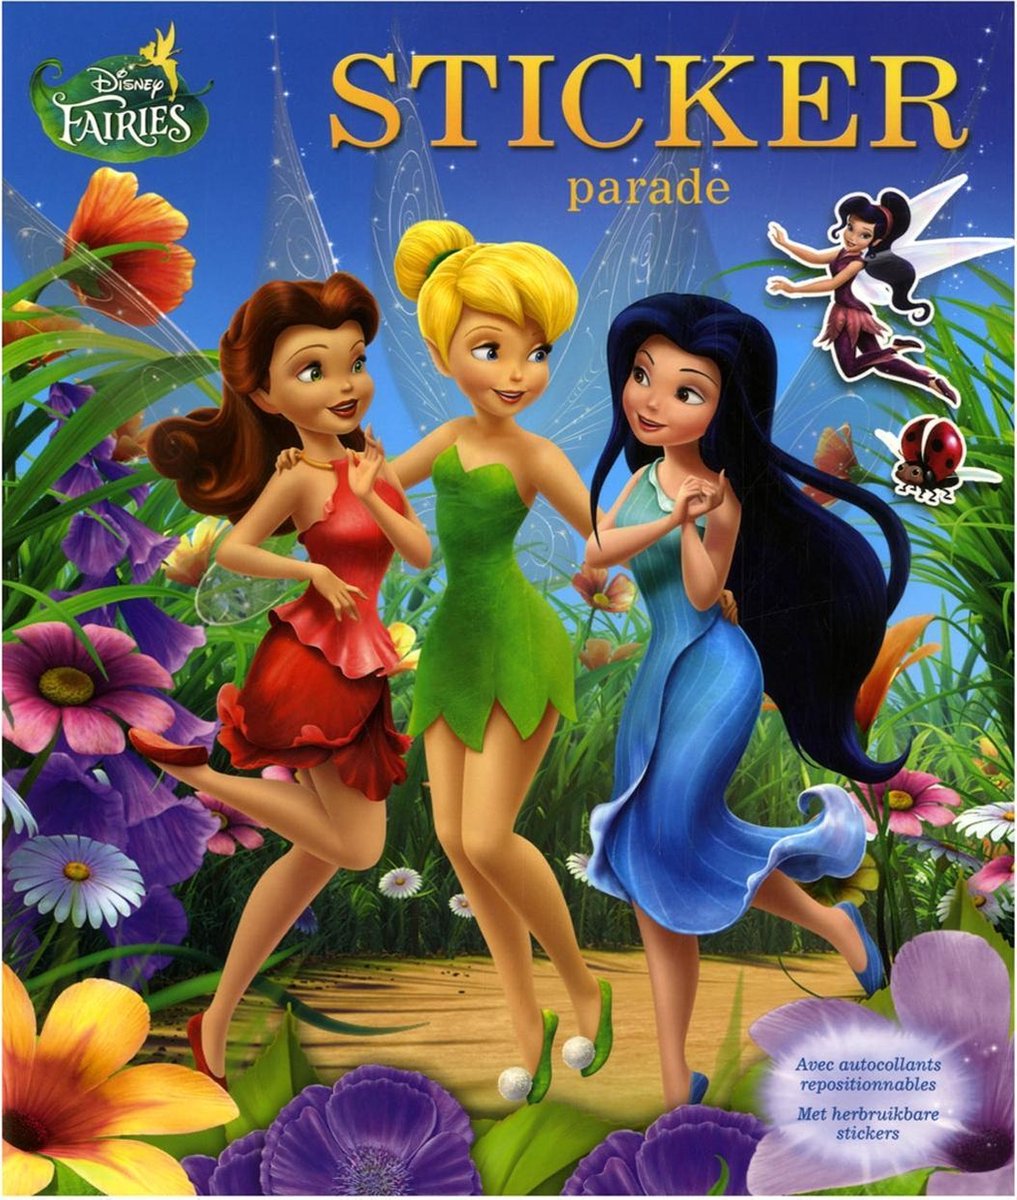 Disney Fairies Sticker Parade